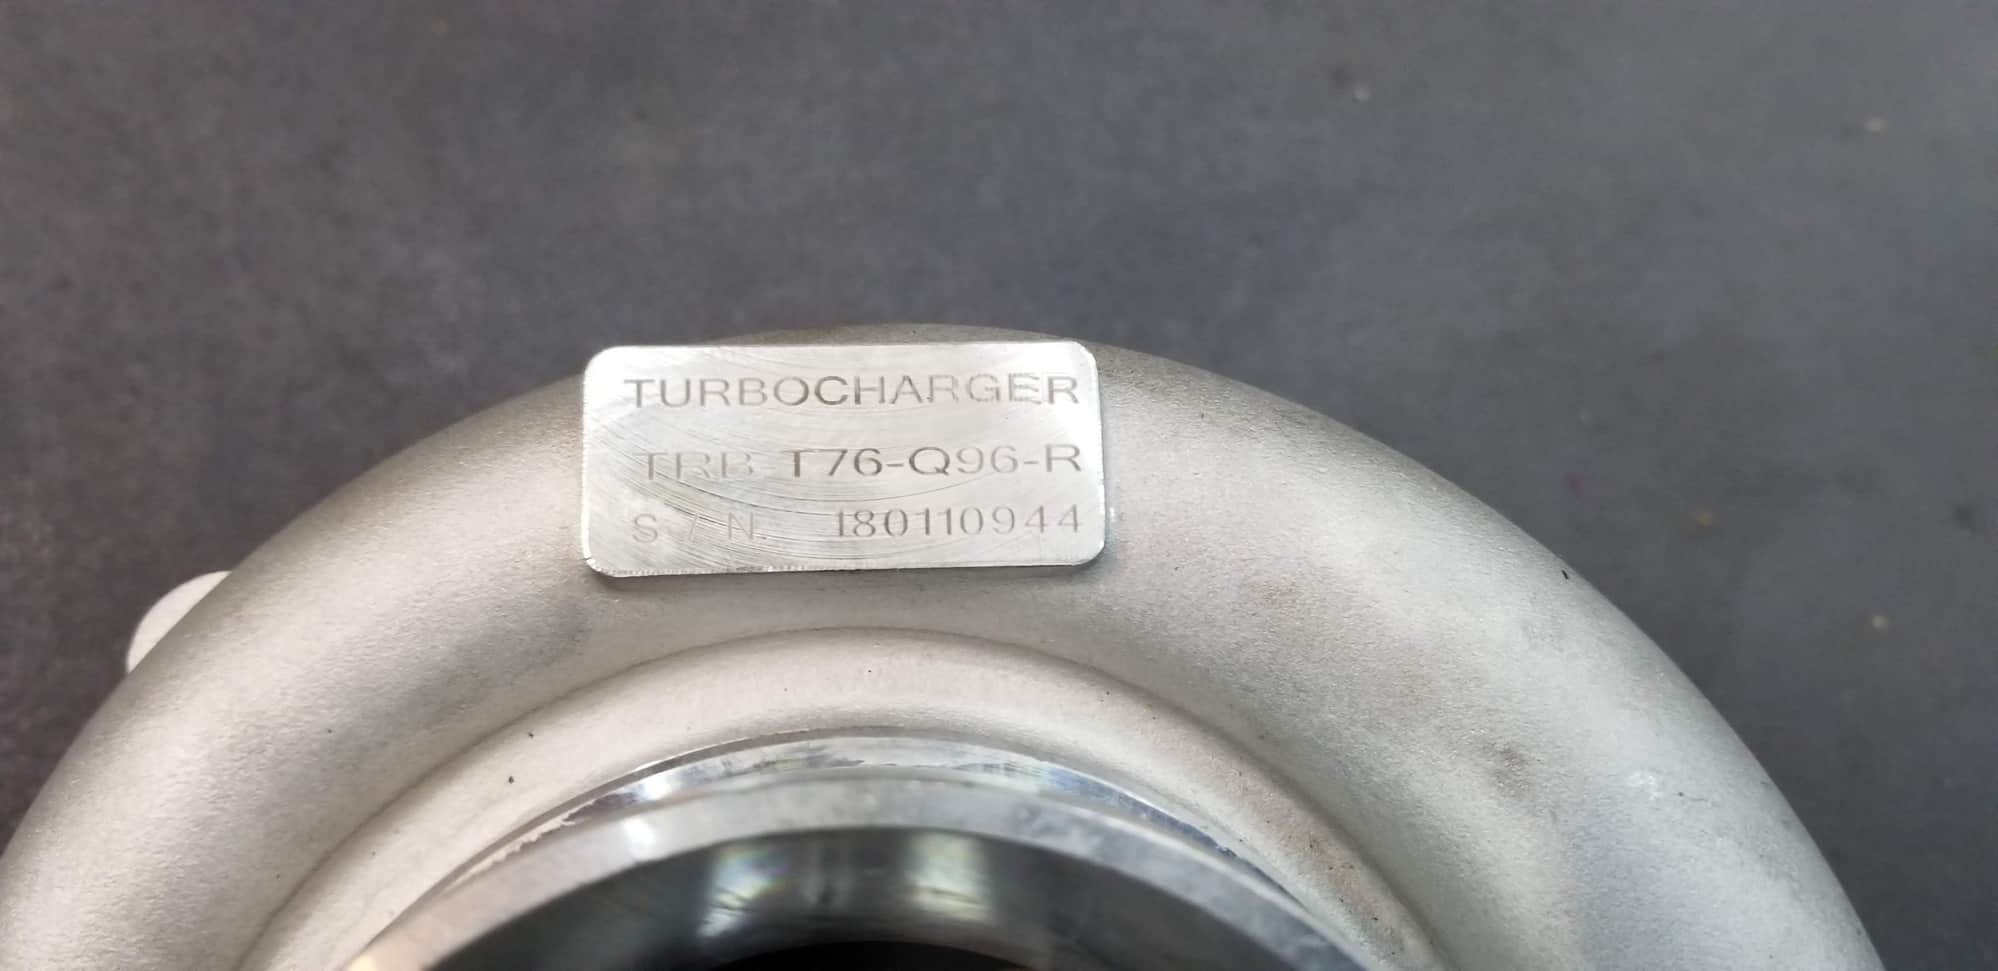  - CX Racing 76mm ball bearing turbo - Fillmore, CA 93015, United States